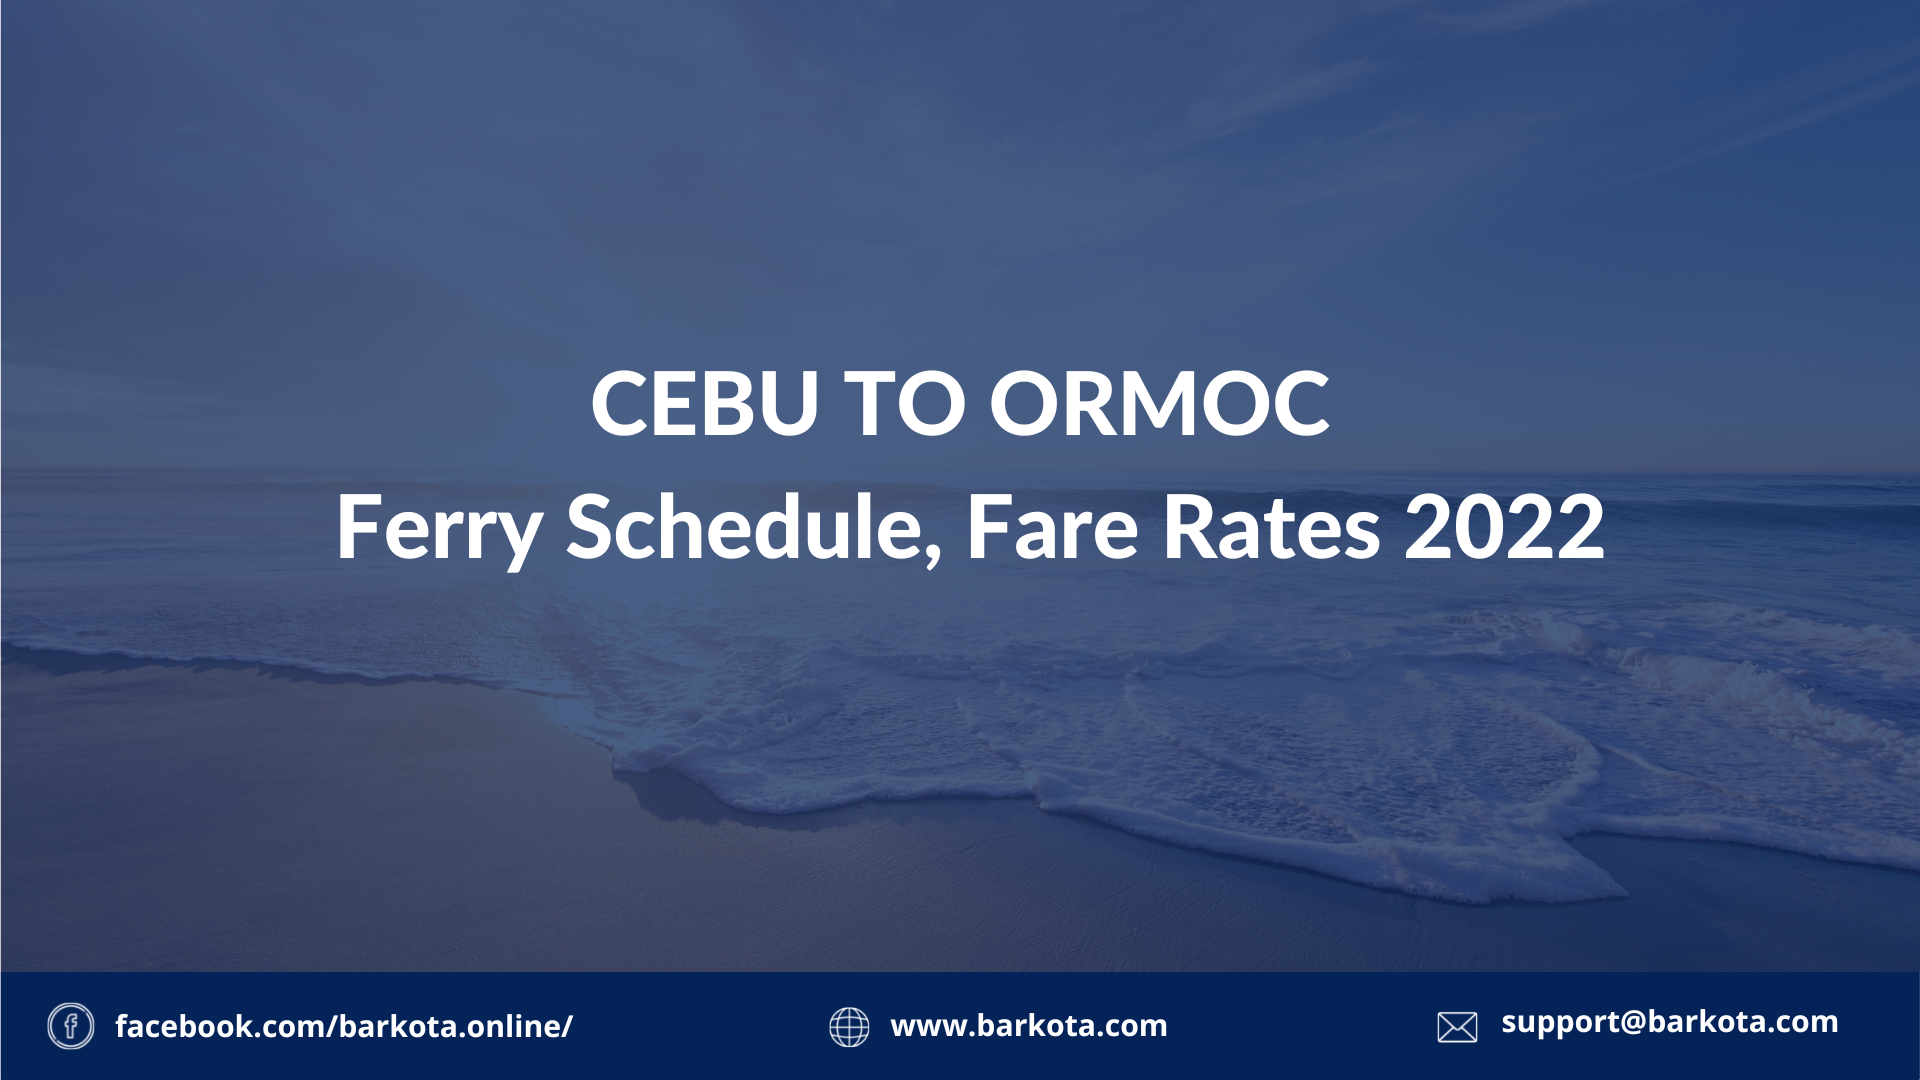 Cebu to Ormoc Ferry Schedule 2022